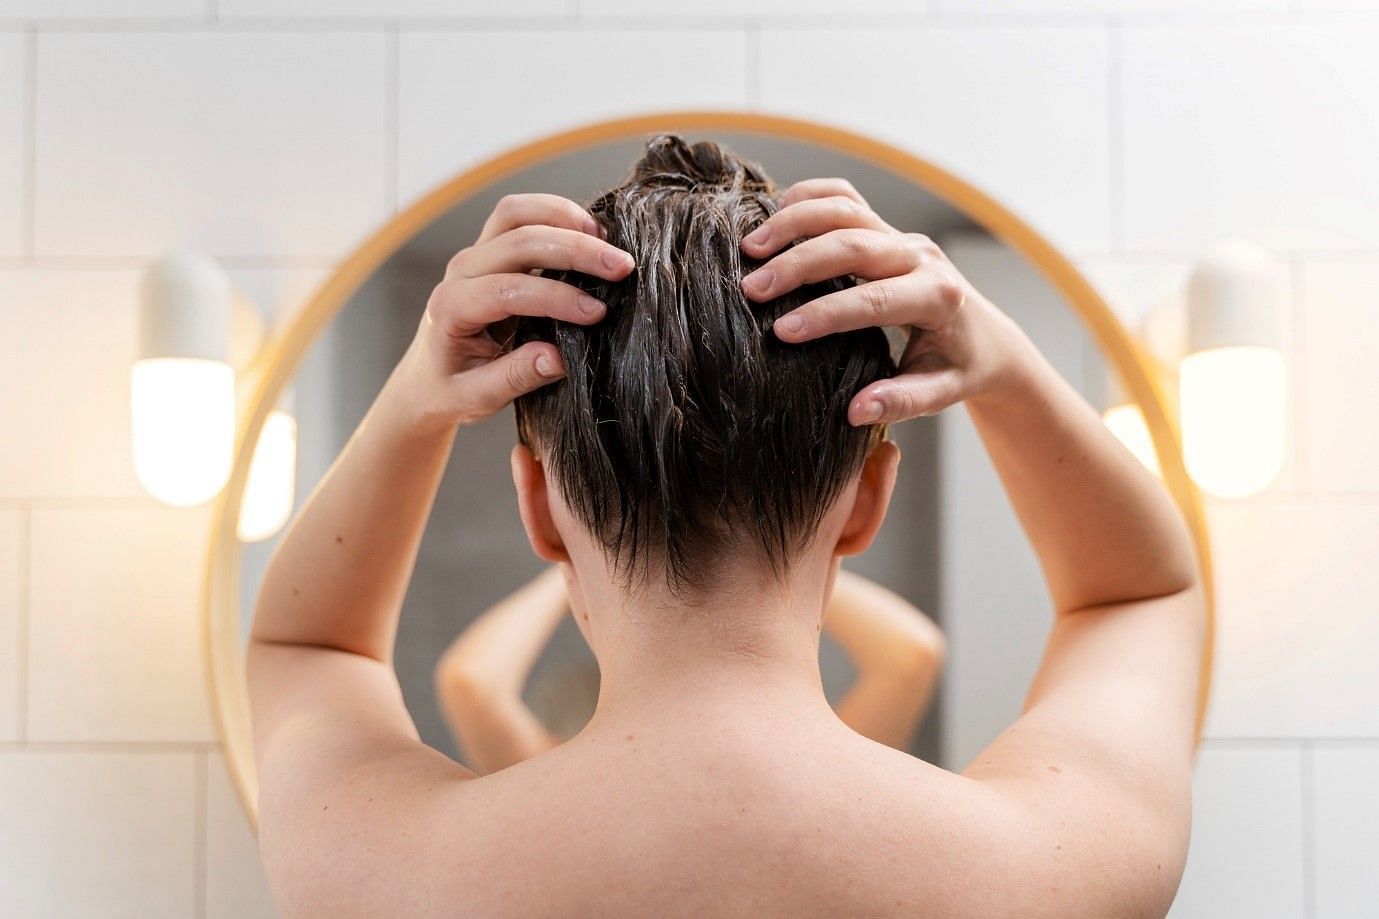 Moisturize dry scalp for overall hair health (image by freepik on freepik)